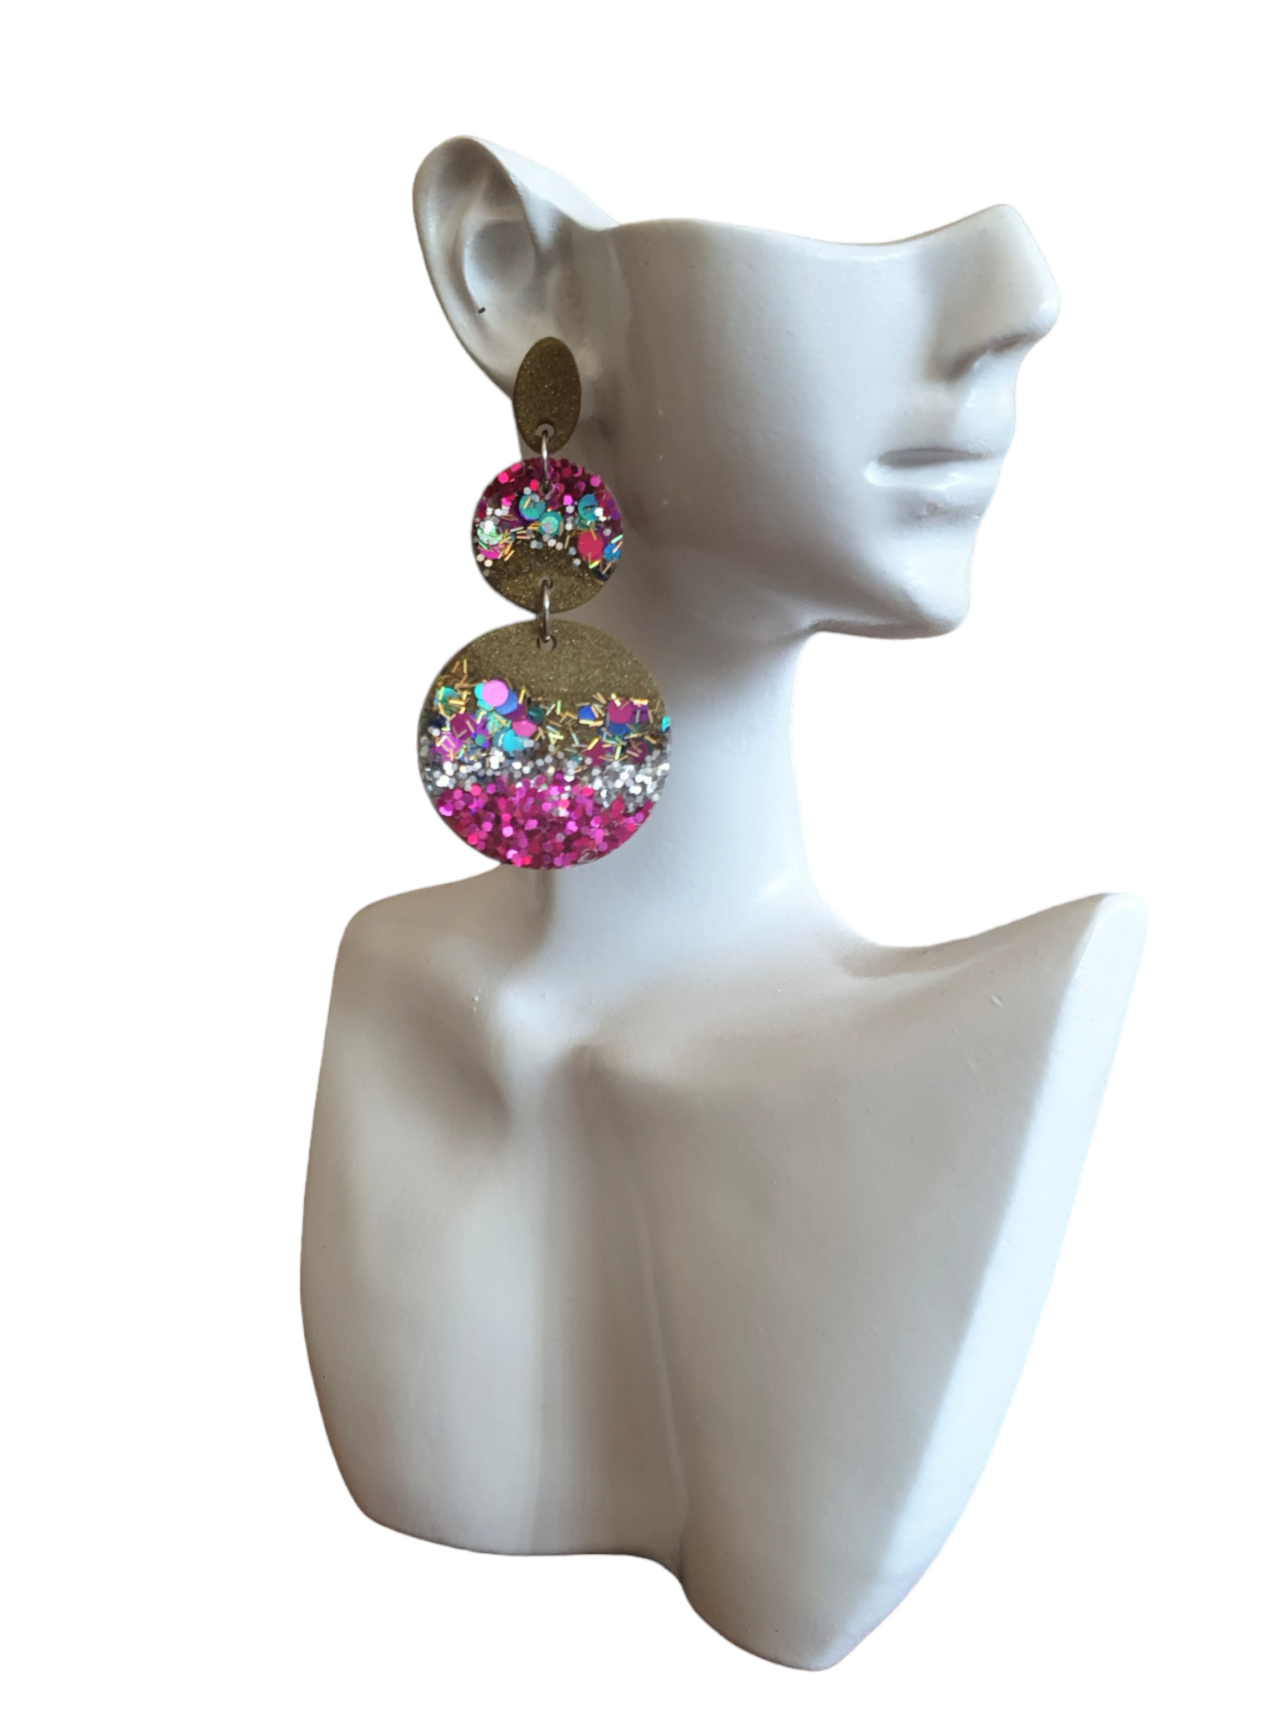 Circle Long Resin Earrings, Statement Pink, Silver, Aqua Holographic Glitter Earrings, Handmade Earrings, Stainless Steel Earrings.